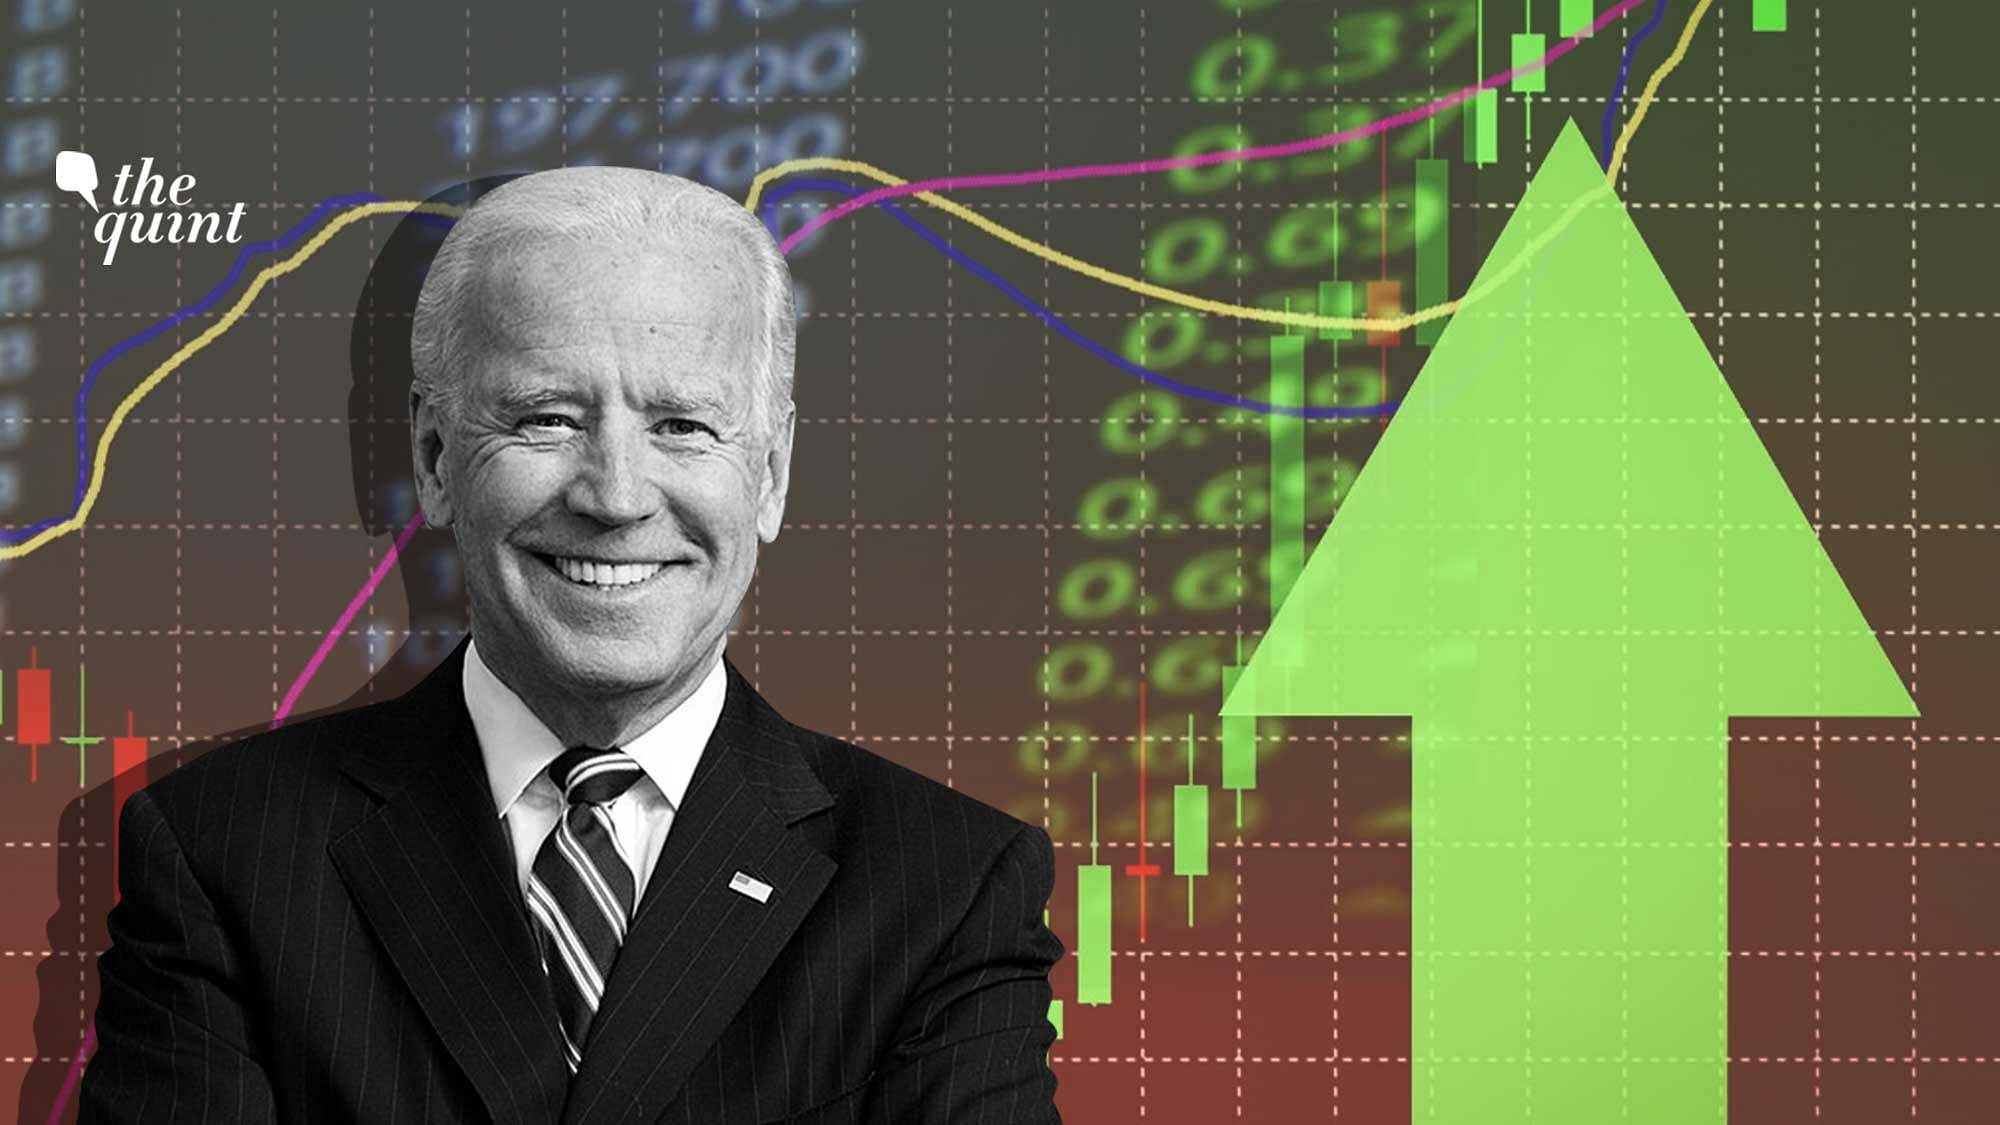 Image of President Joe Biden used for representational purposes.